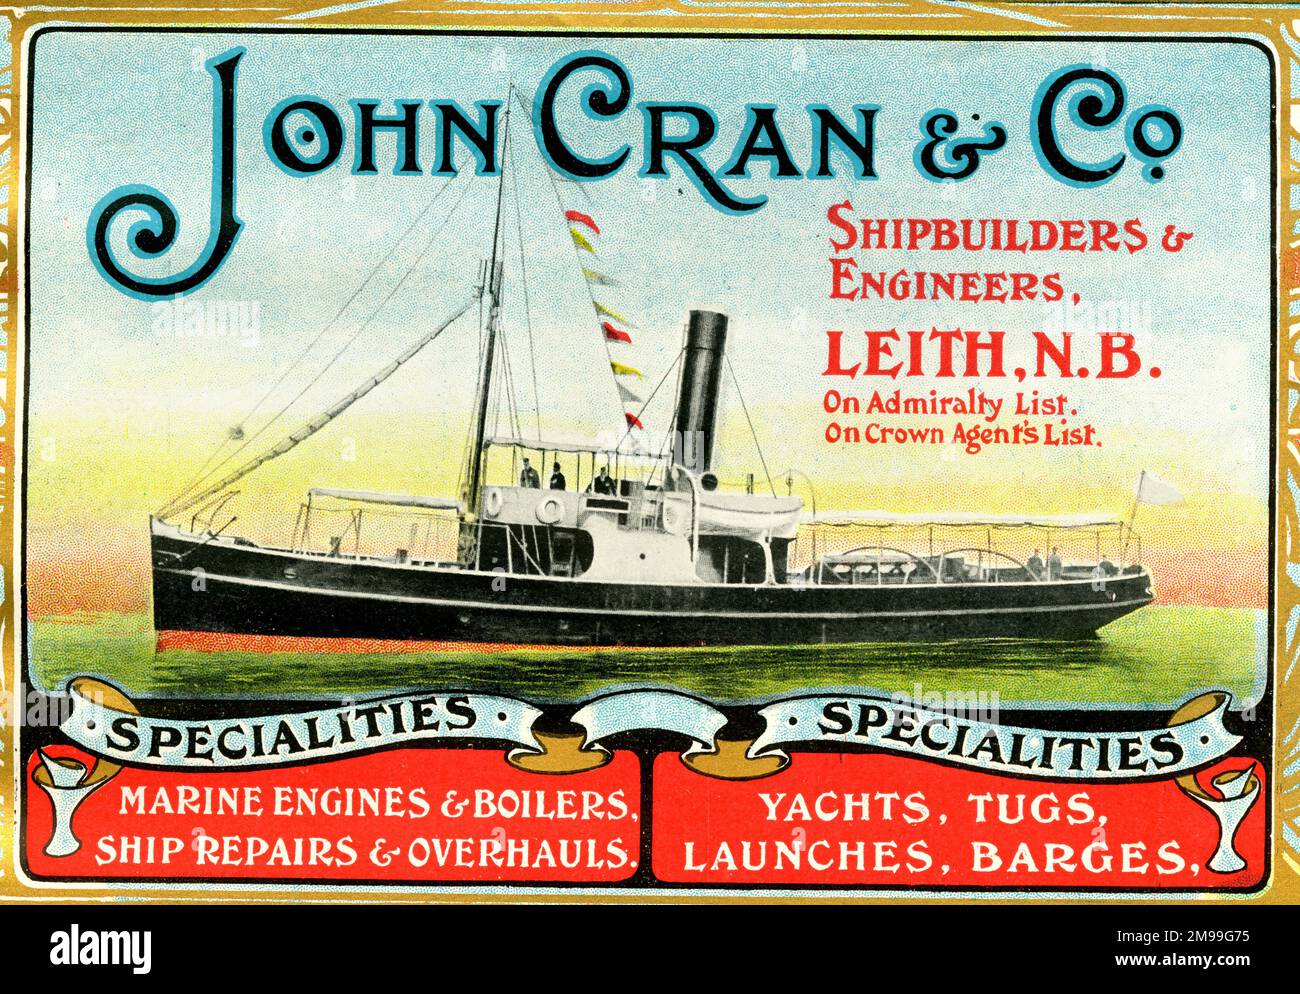 Pubblicità per John Cran & Co, costruttori di navi e ingegneri, Leith, Scozia. Foto Stock